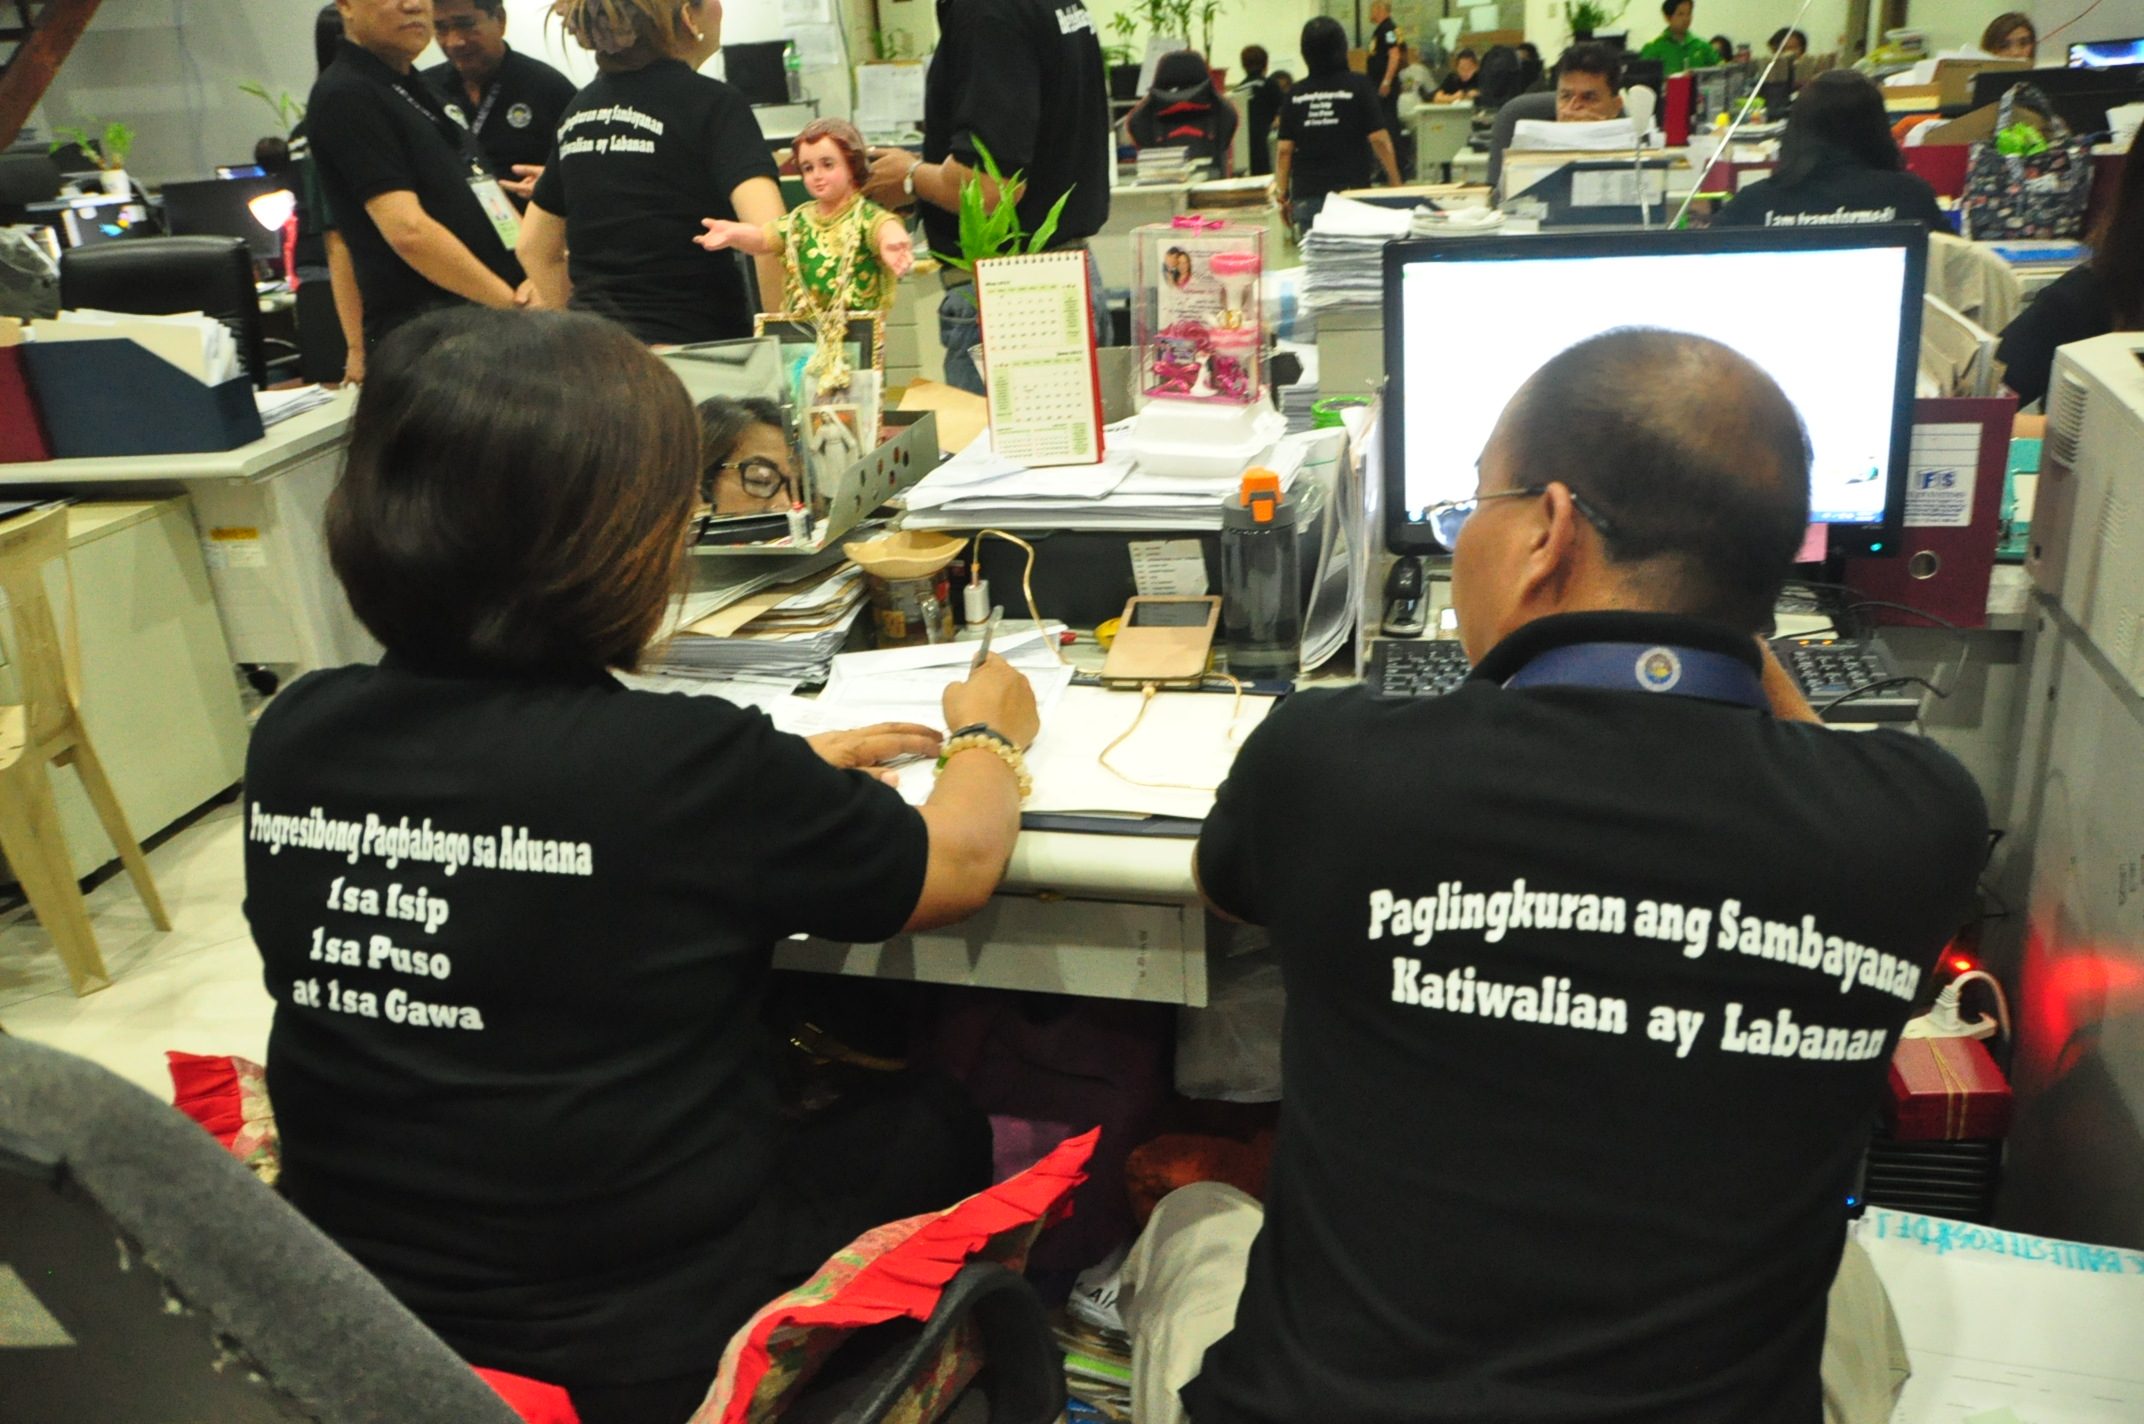 Customs employees wear ‘hugot’ shirts to inspire change